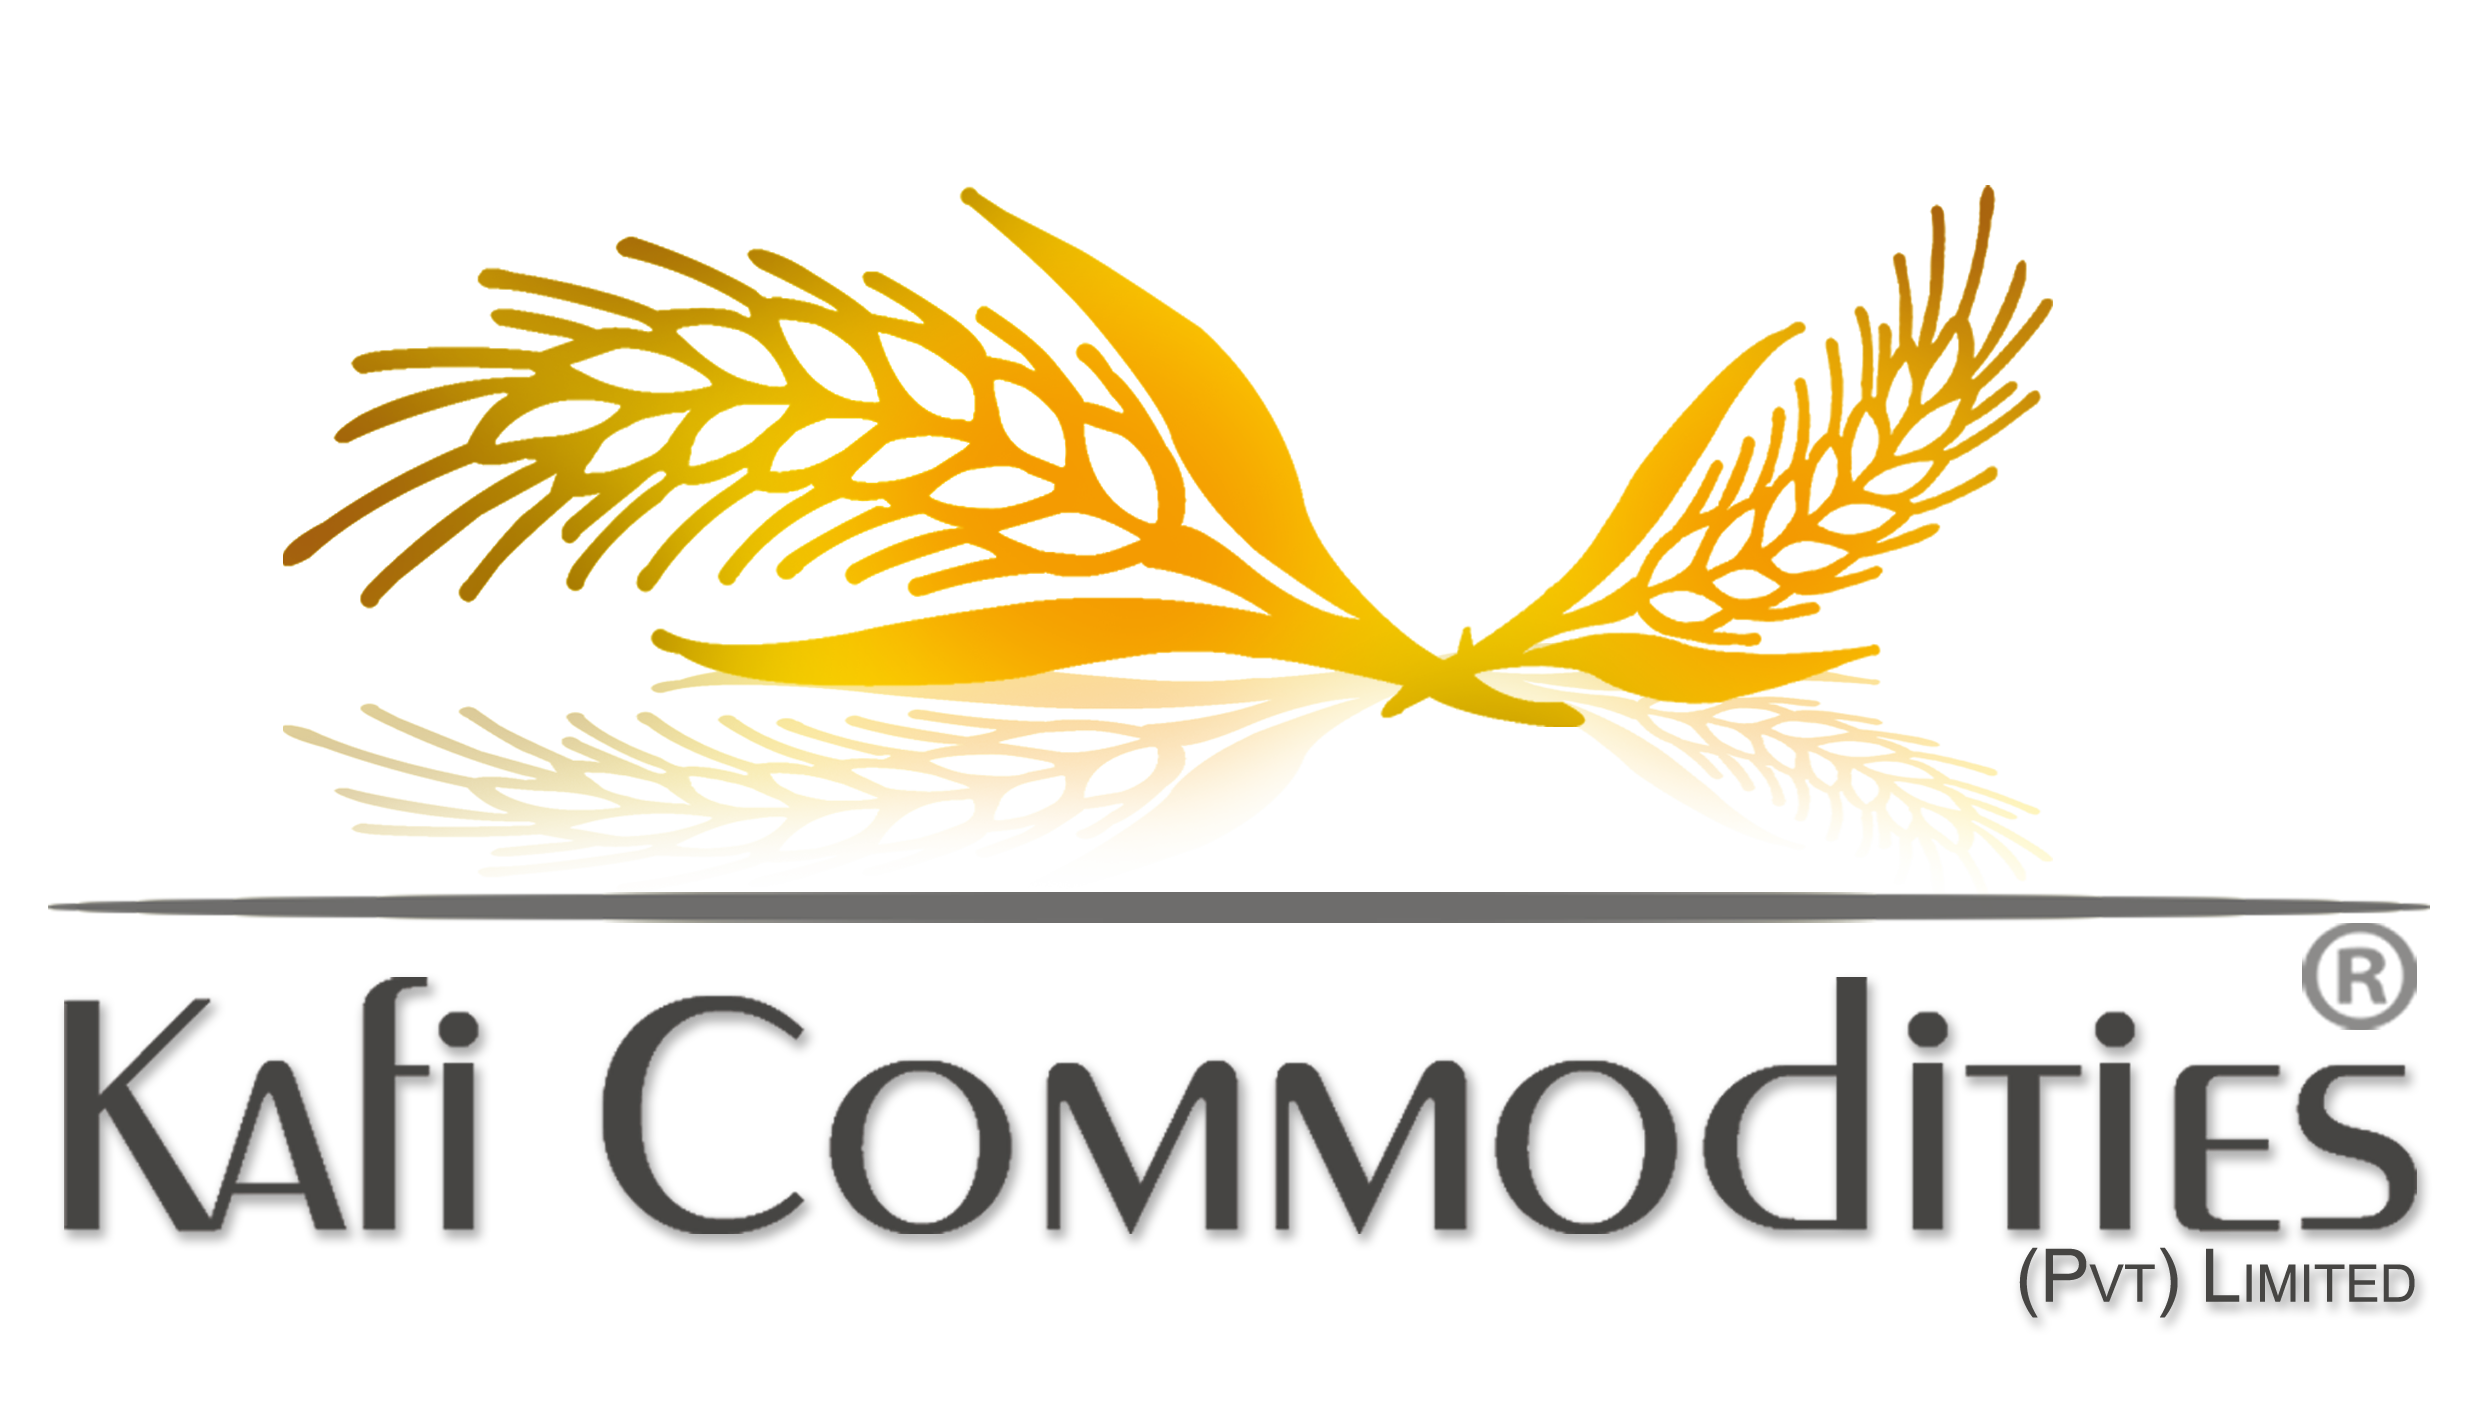 Kafi Commodities (Pvt) Limited